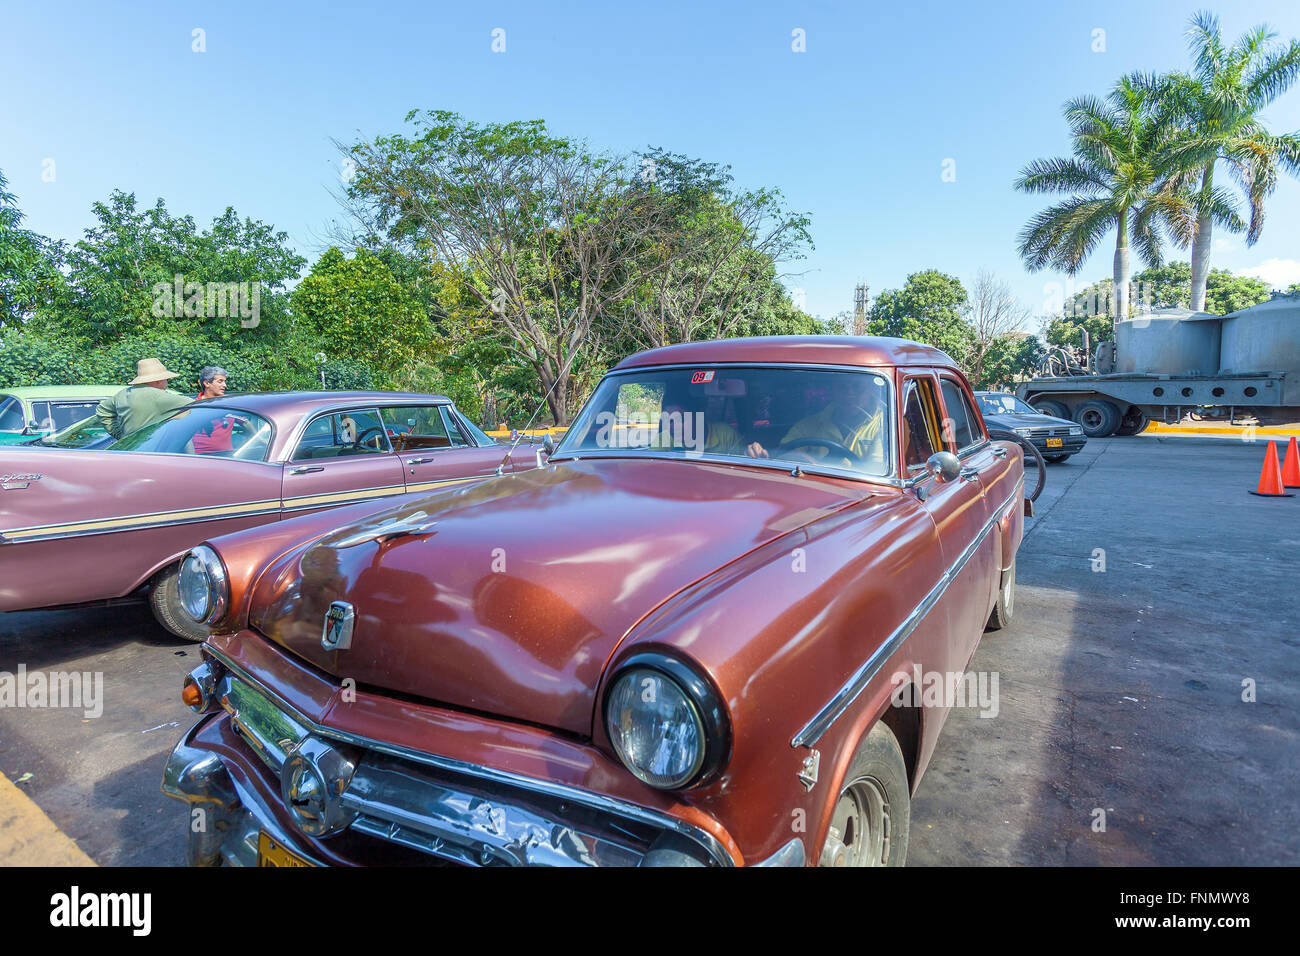 CIENFUEGOS, CUBA - Mars 23, 2012 : Rural road parking avec retro Ford voiture usage éditorial uniquement. Banque D'Images